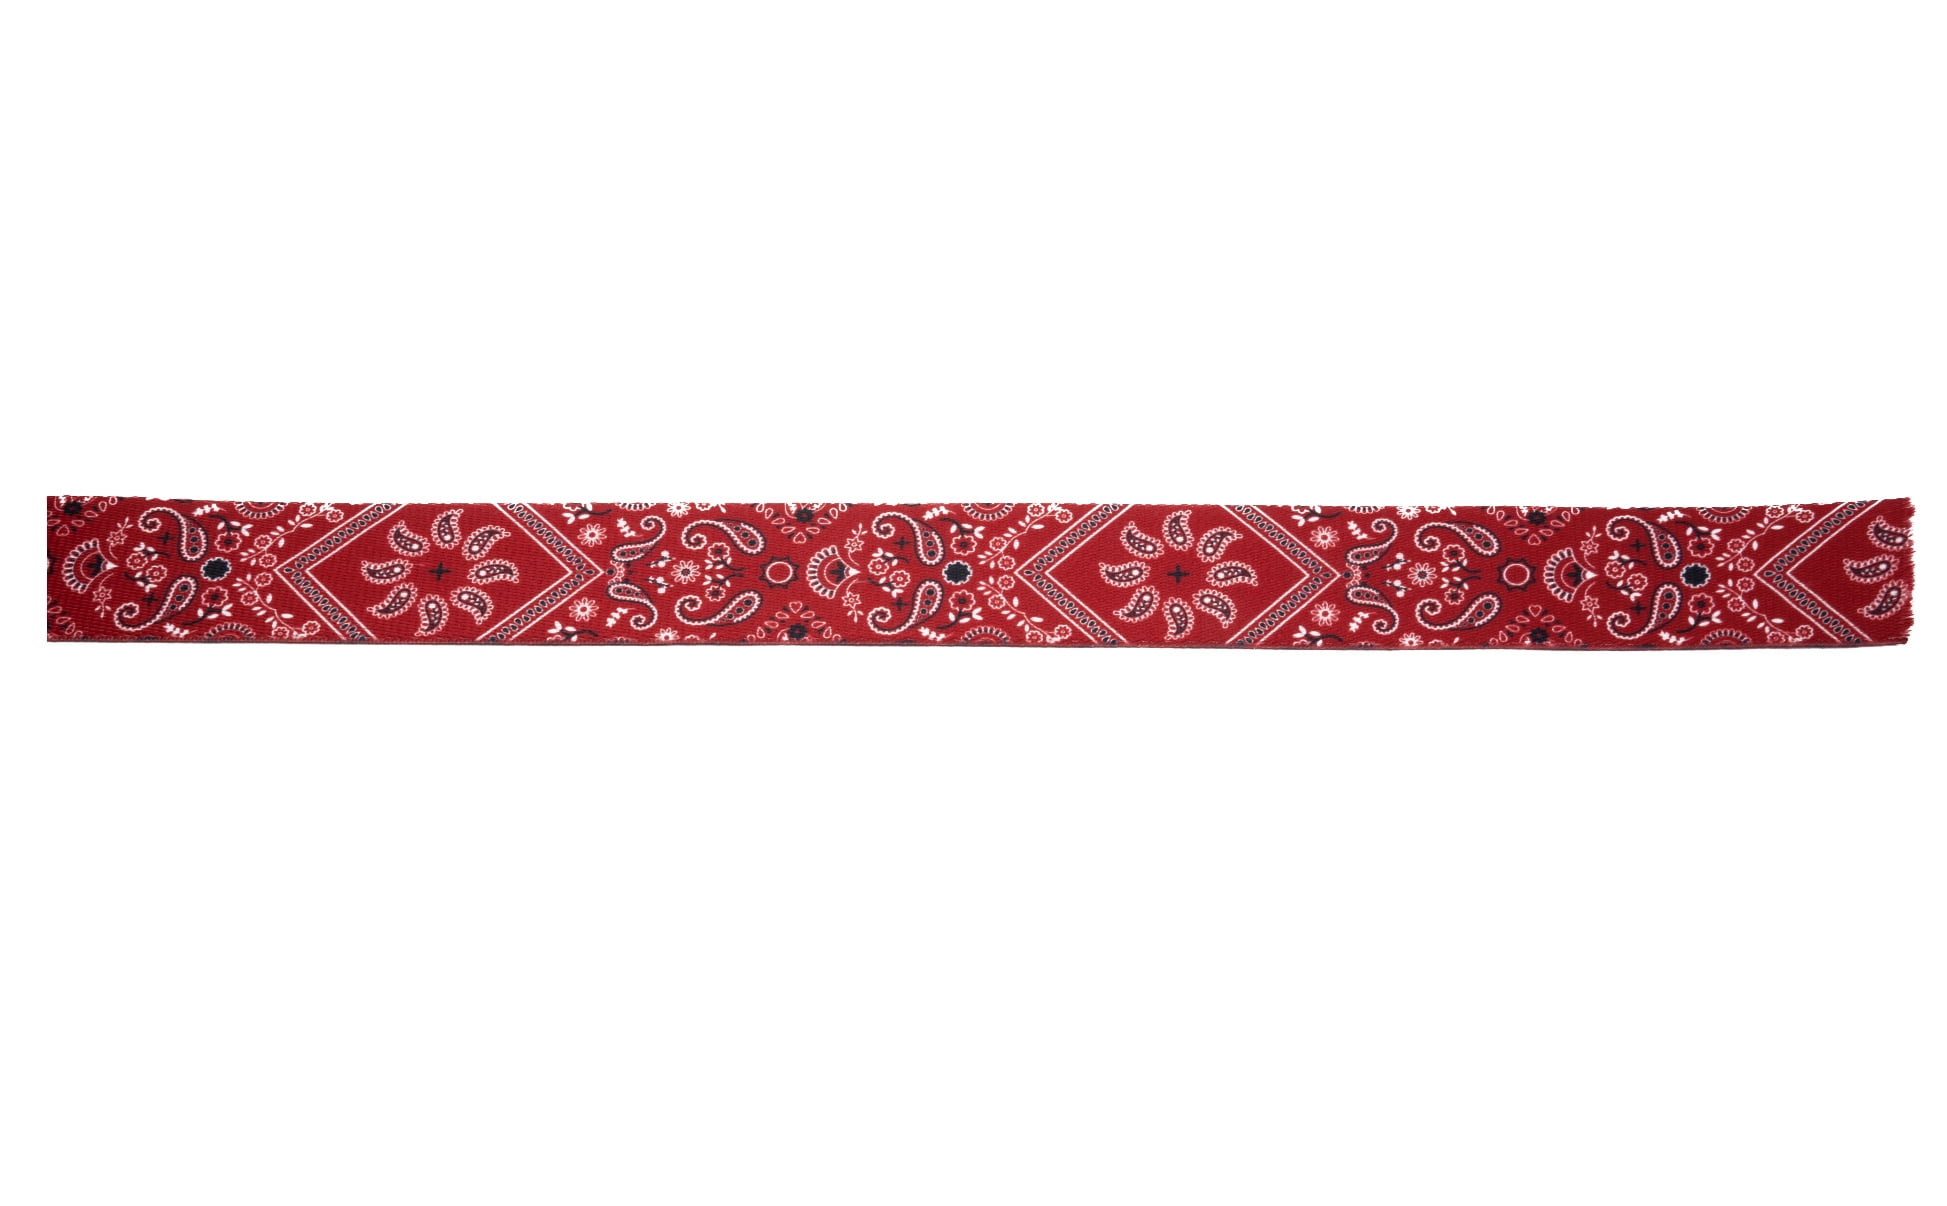 Country Brook Design® 1 1/2 inch Red Bandana Grosgrain Ribbon, 2 Yards 